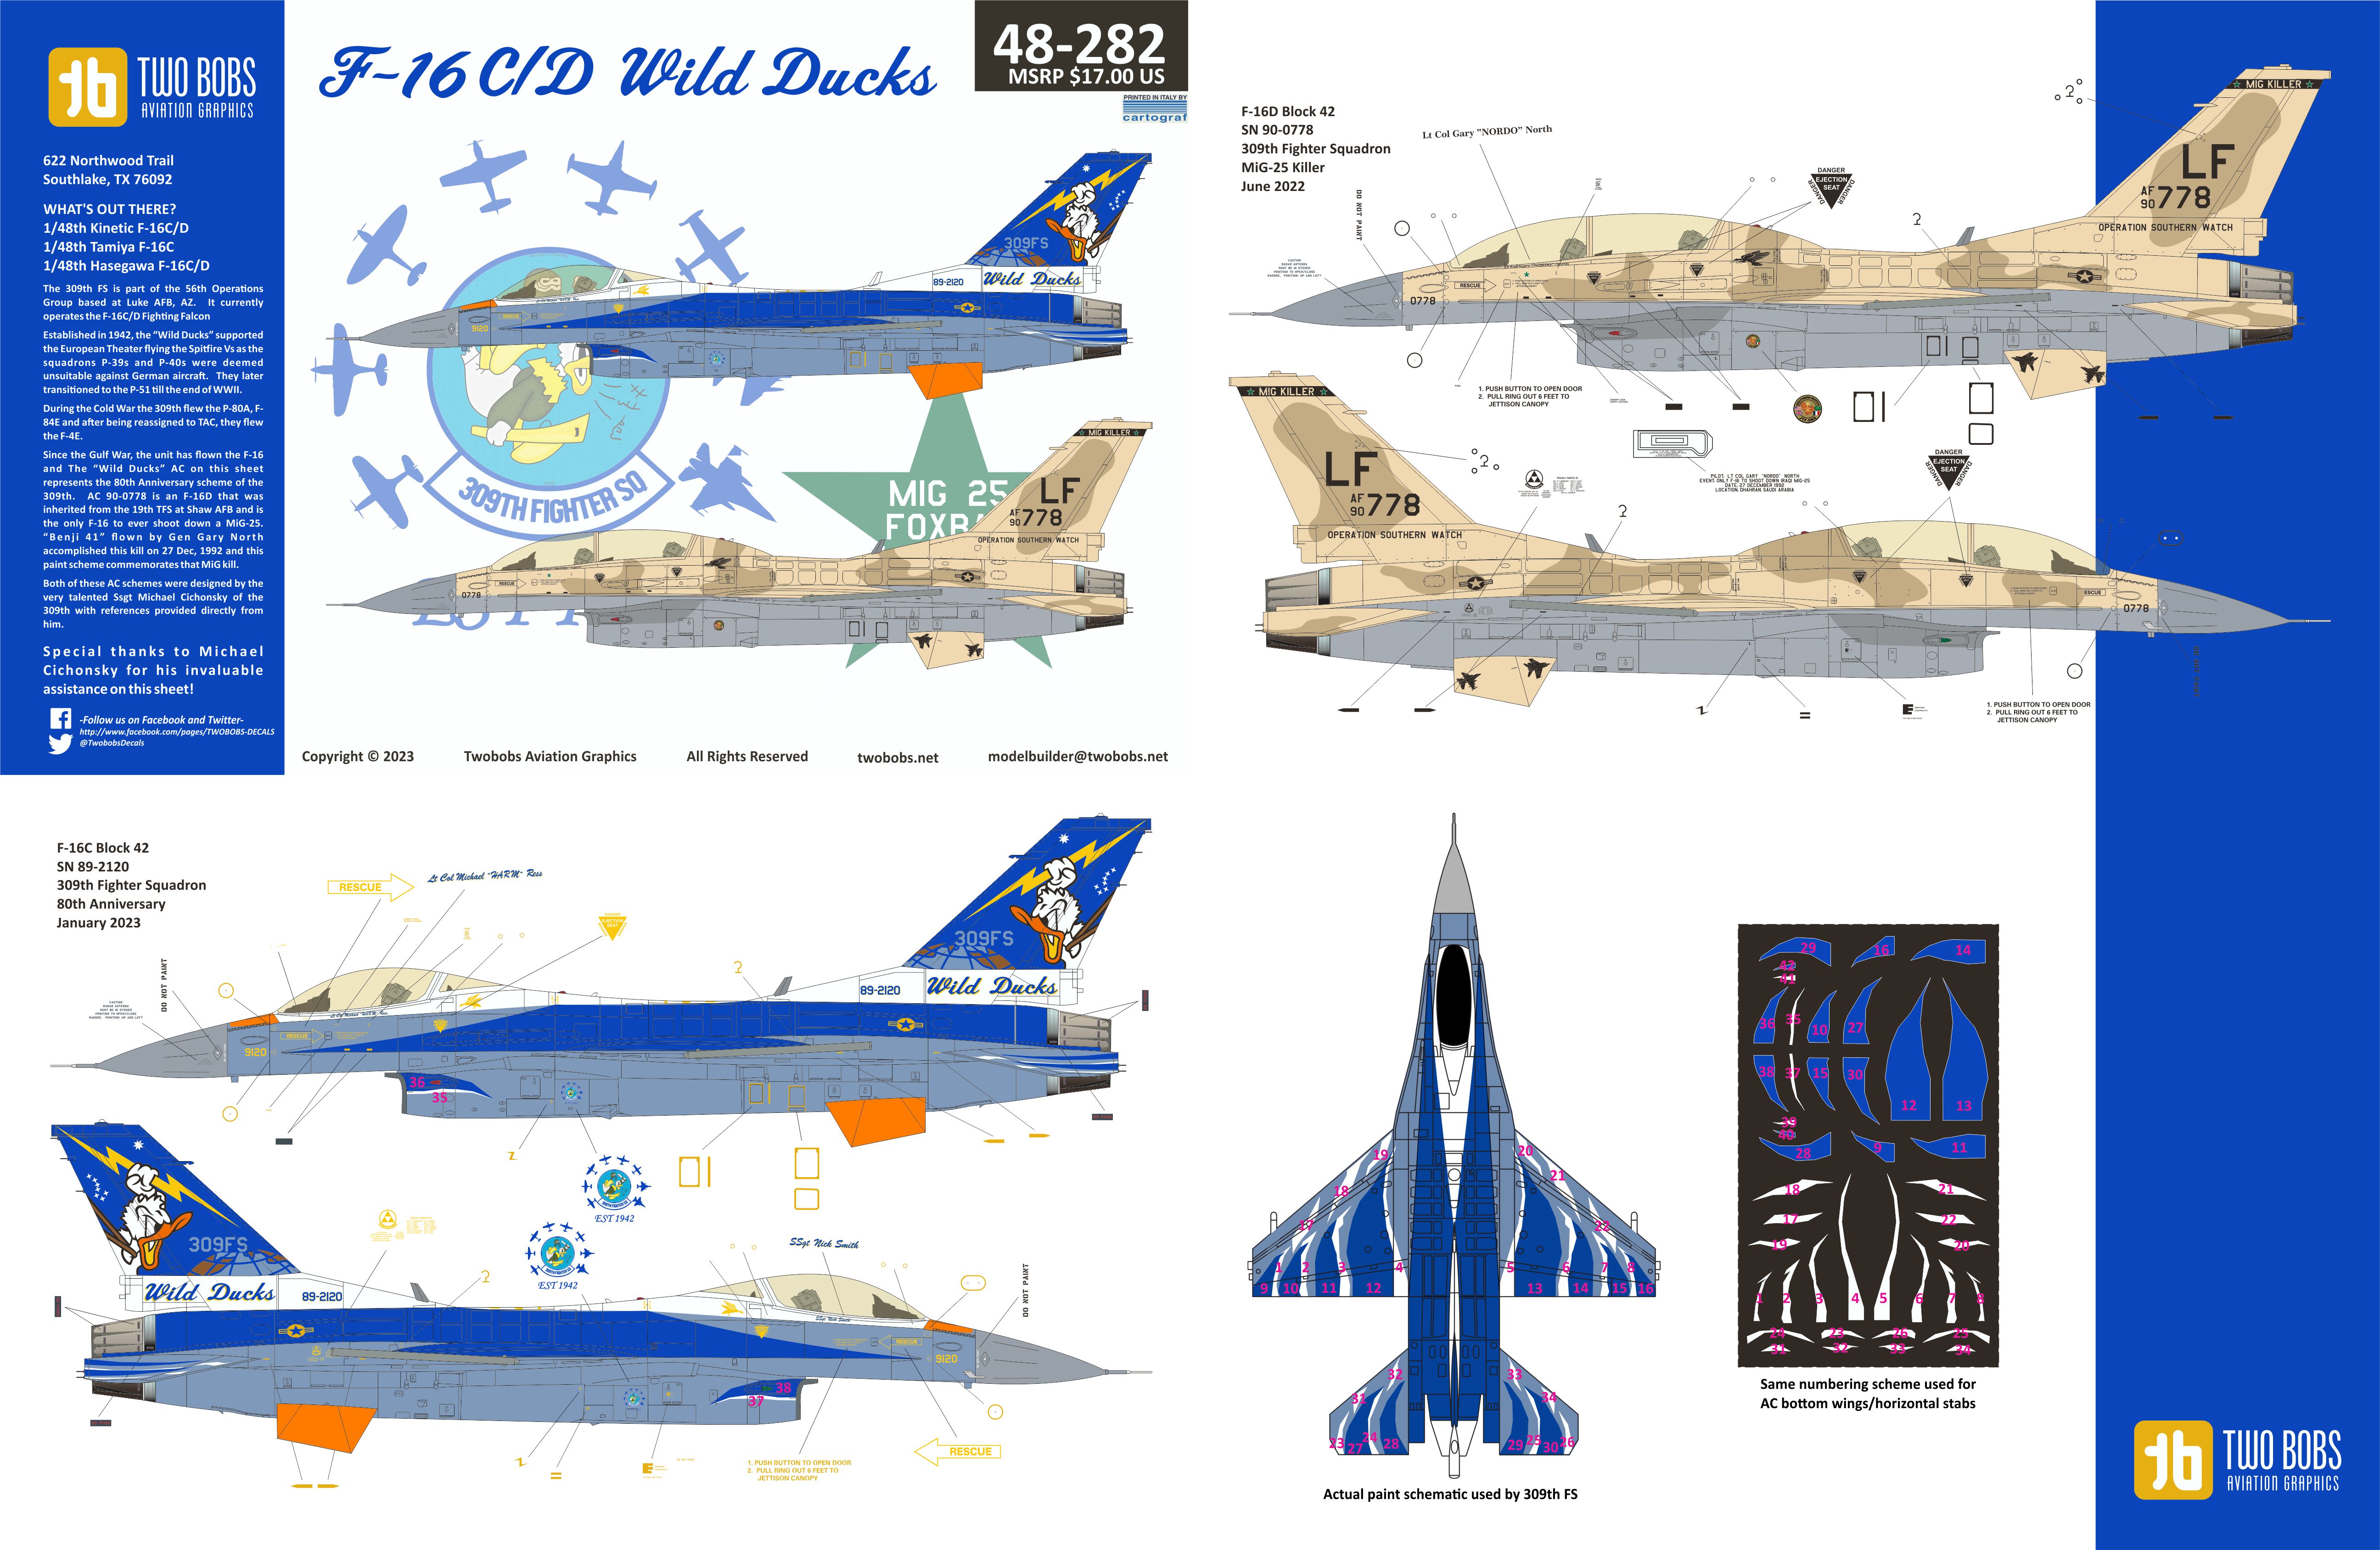 Декаль 1/48 Lockheed-Martin F-16C/D Wild Ducks (Two Bobs)